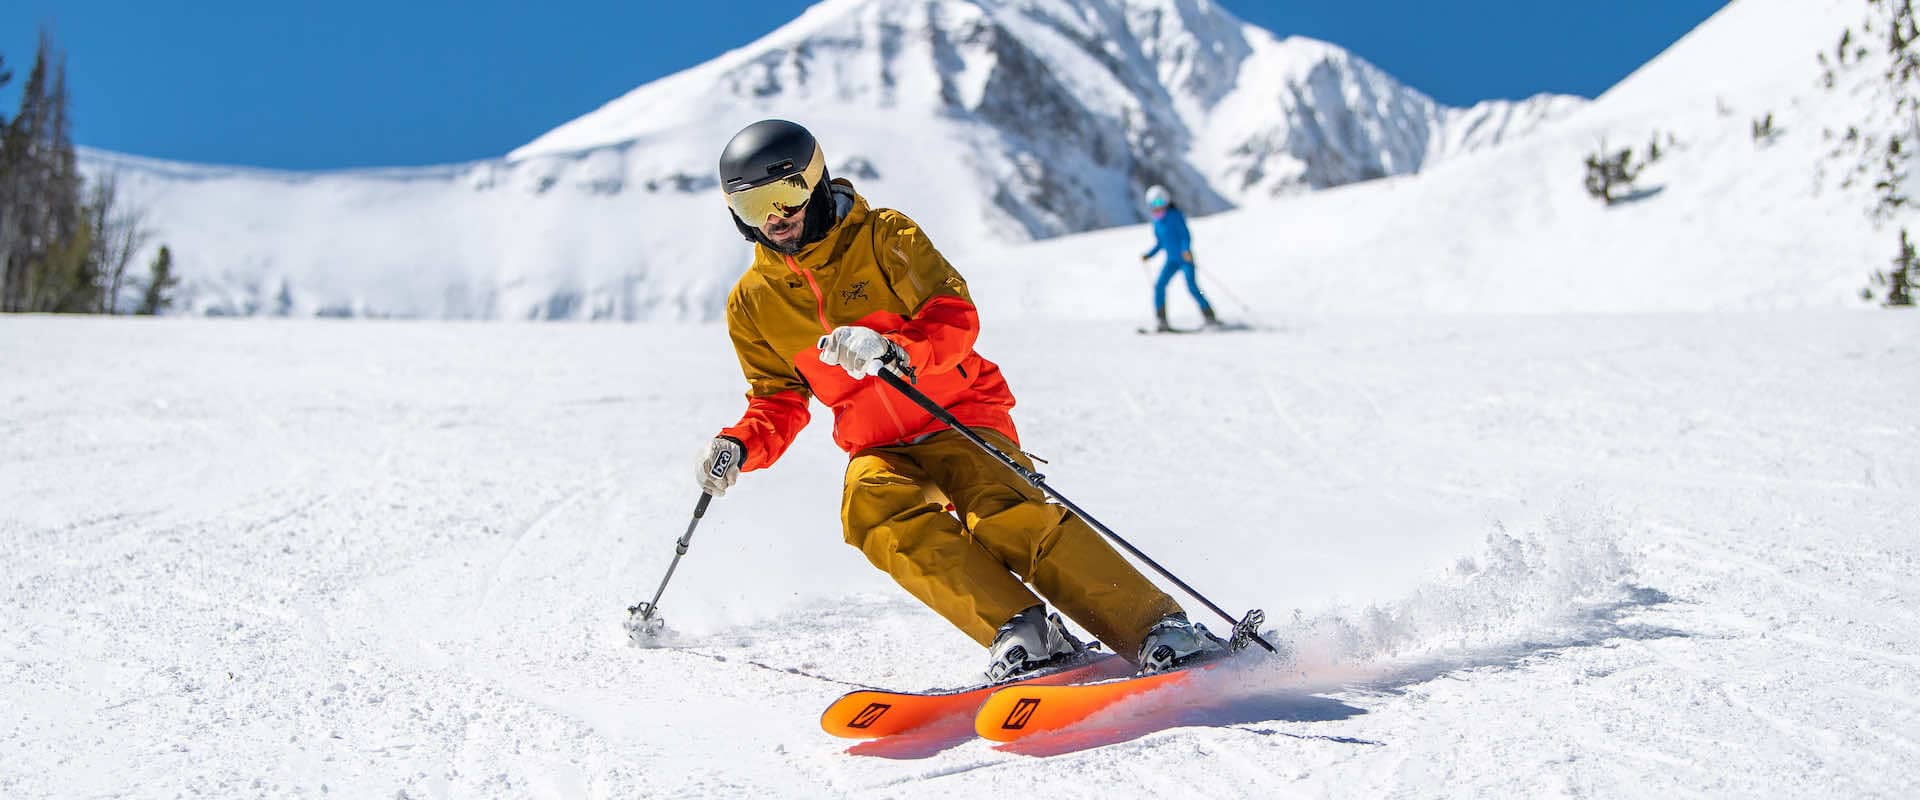 Adult ski and snowboard lessons at Big Sky Resort